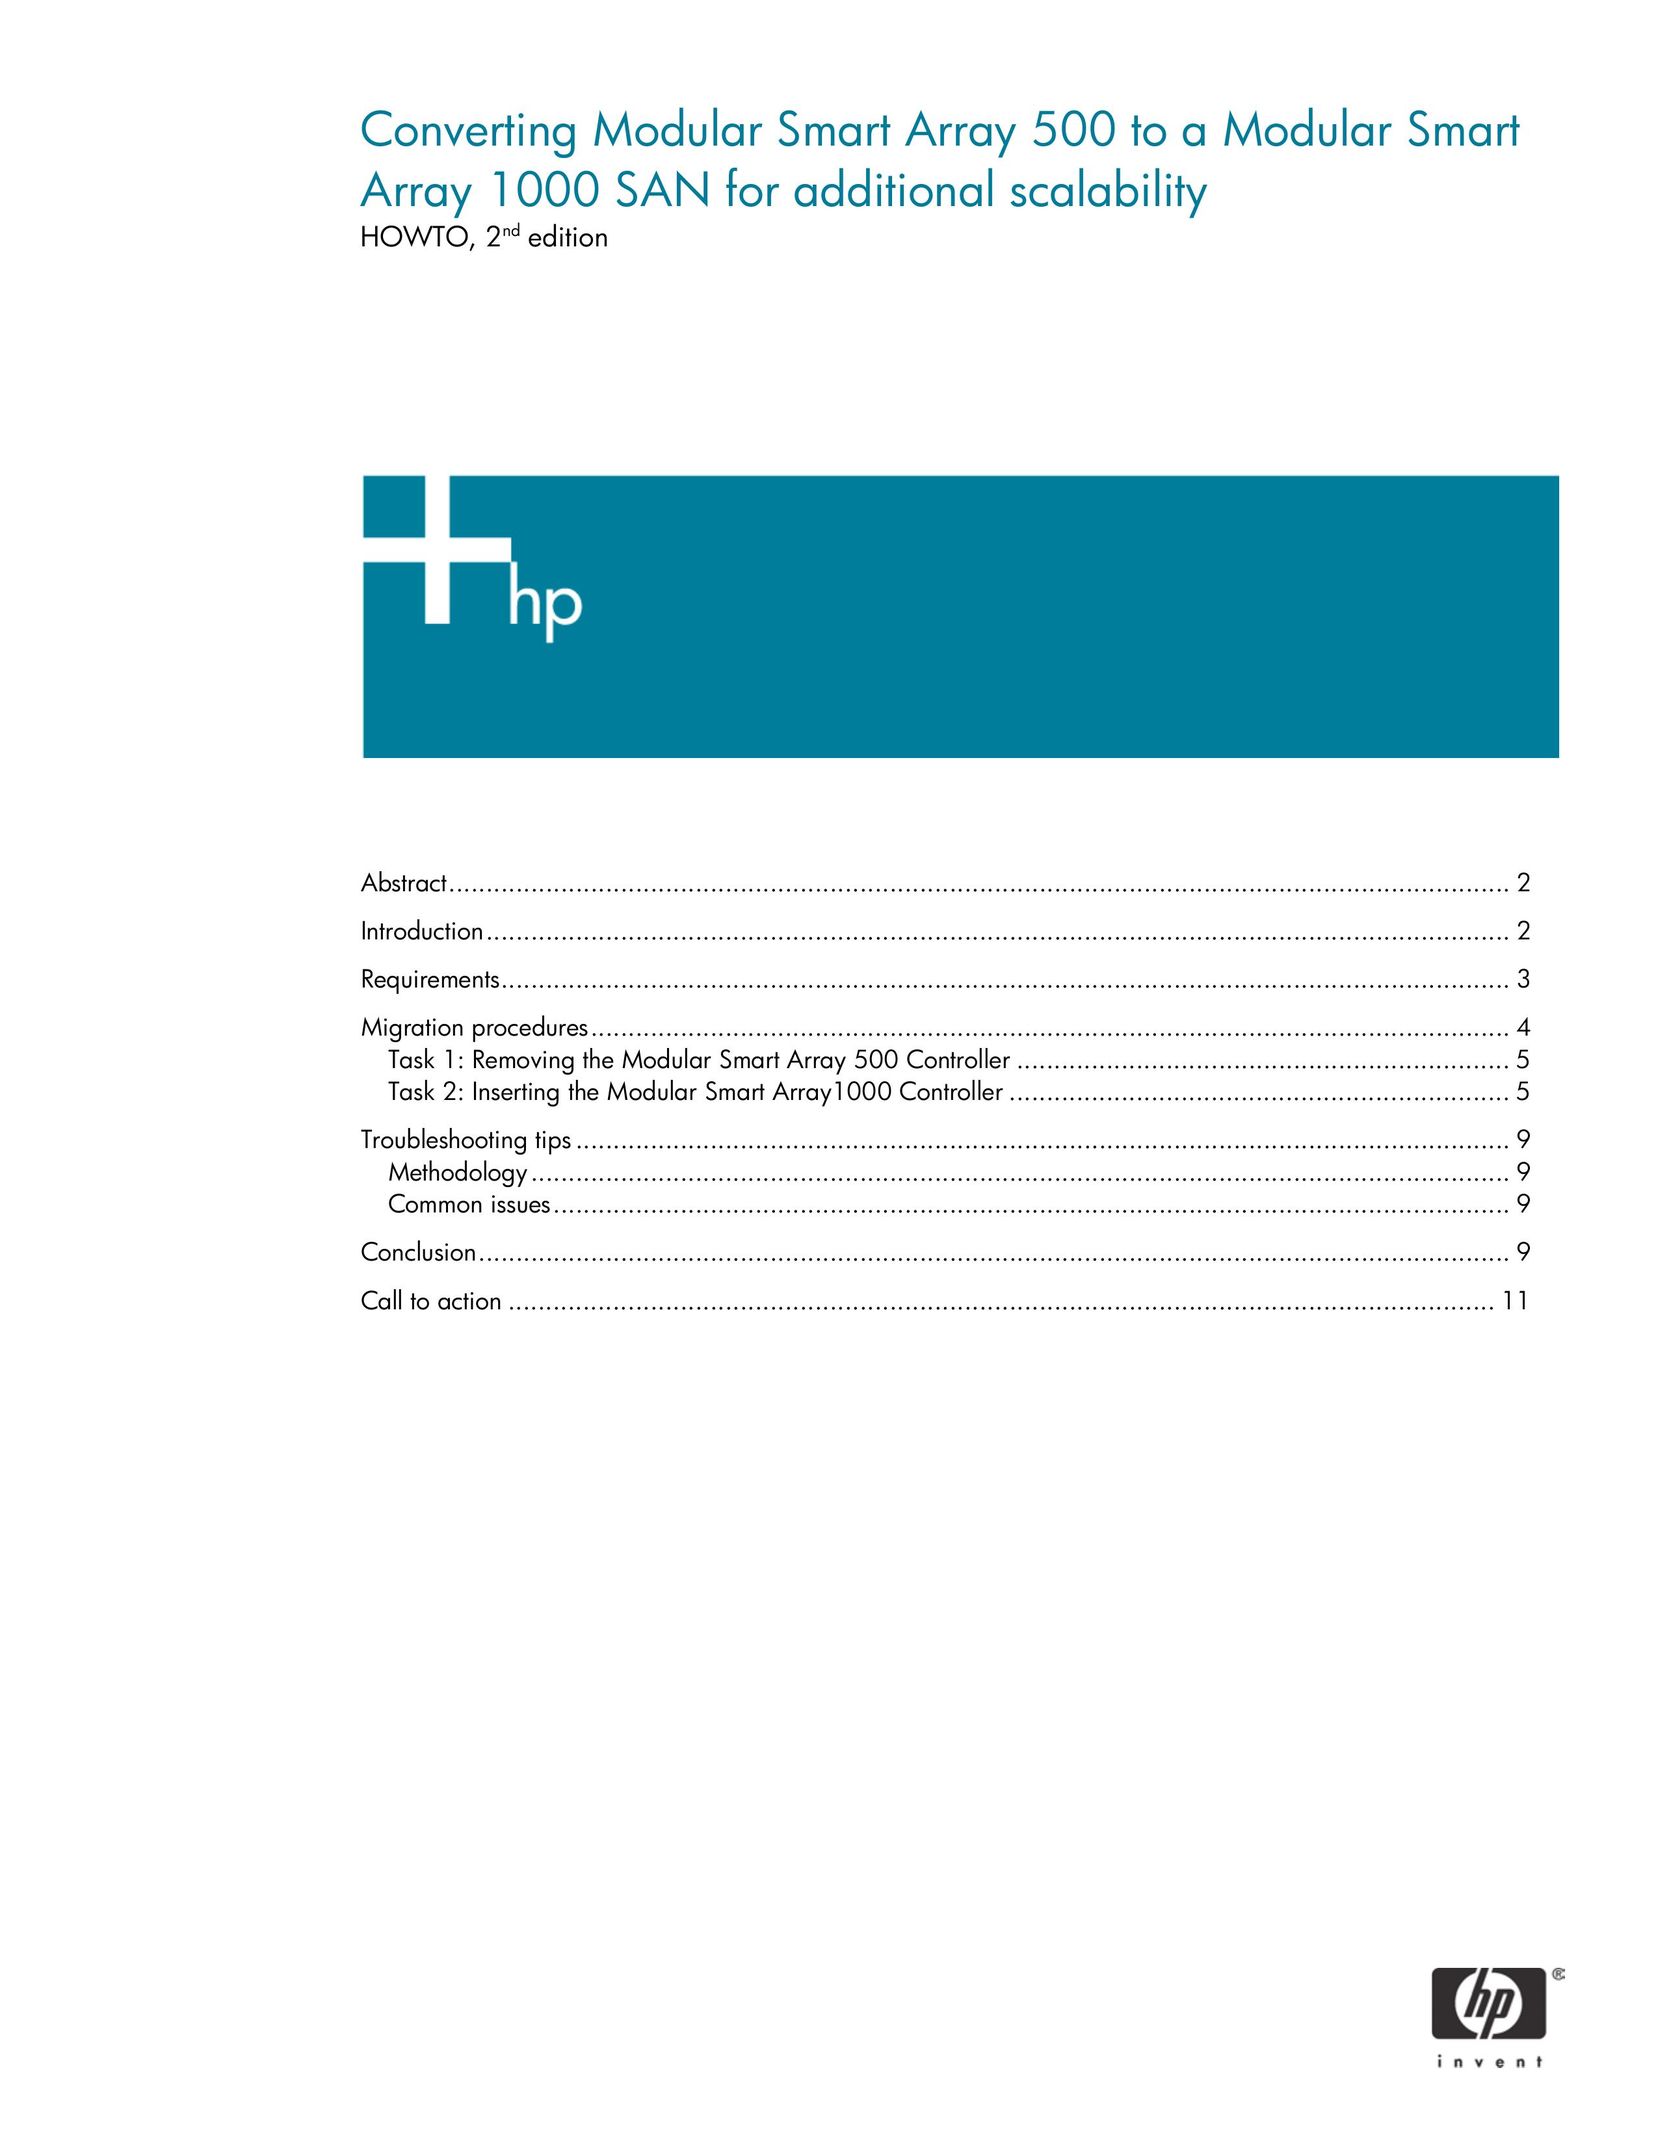 HP (Hewlett-Packard) 2nd edition Network Hardware User Manual